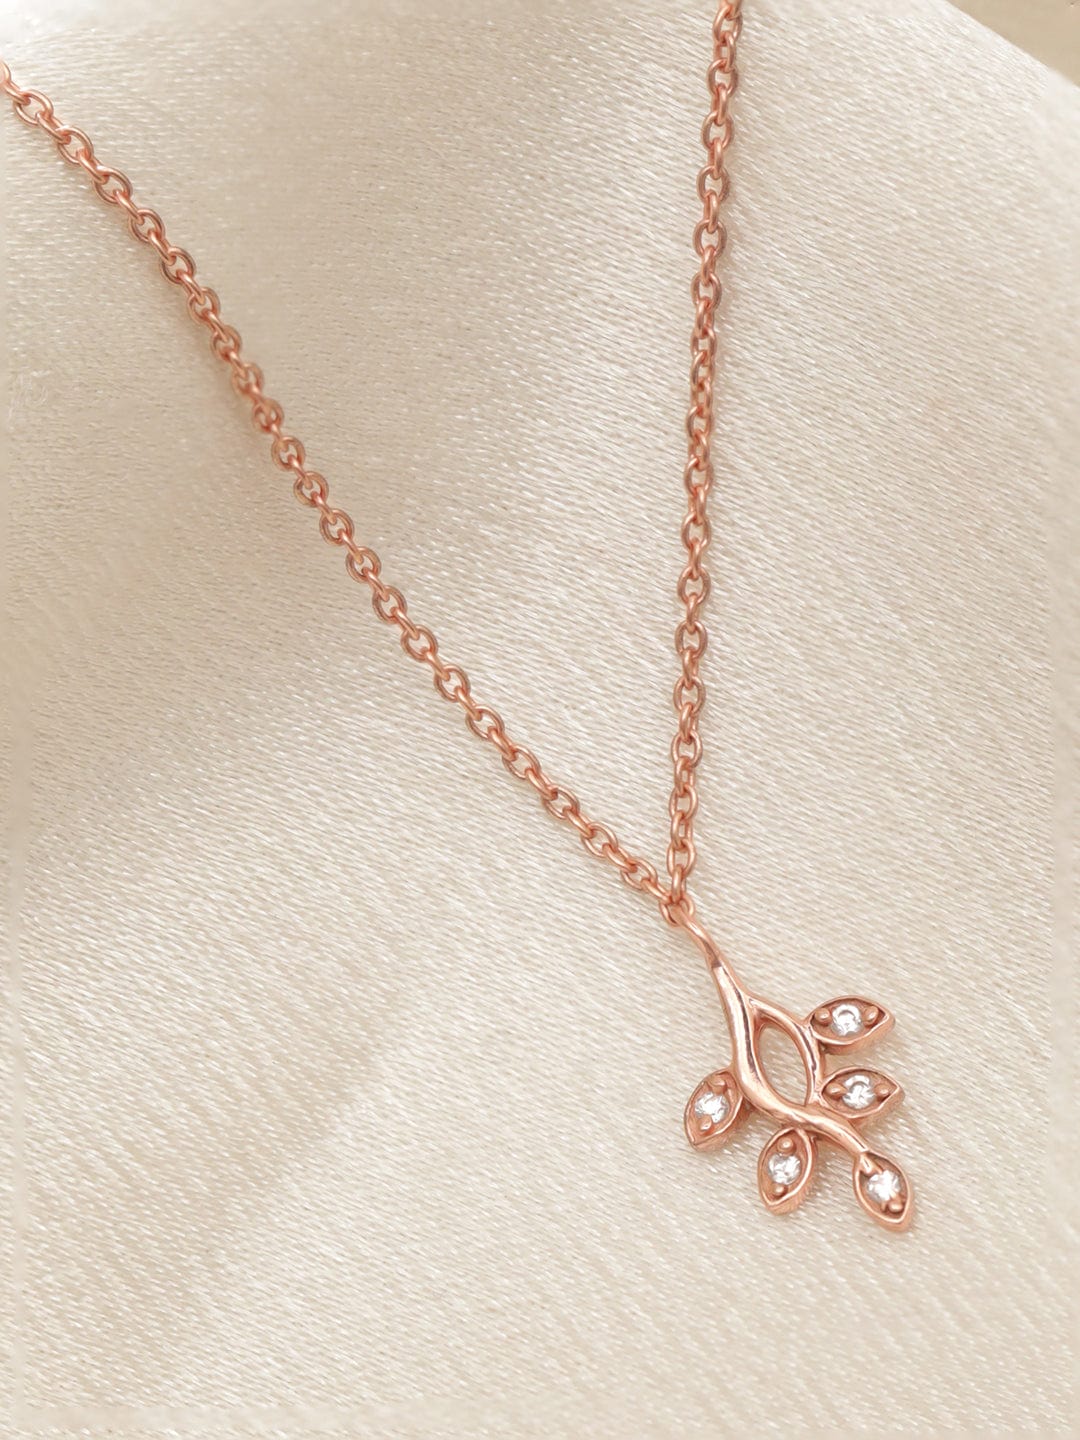 Rubans 925 Silver 18K Rose Gold Leaf Charm Zirconia Pendant Necklace. Necklaces, Necklace Sets, Chains & Mangalsutra